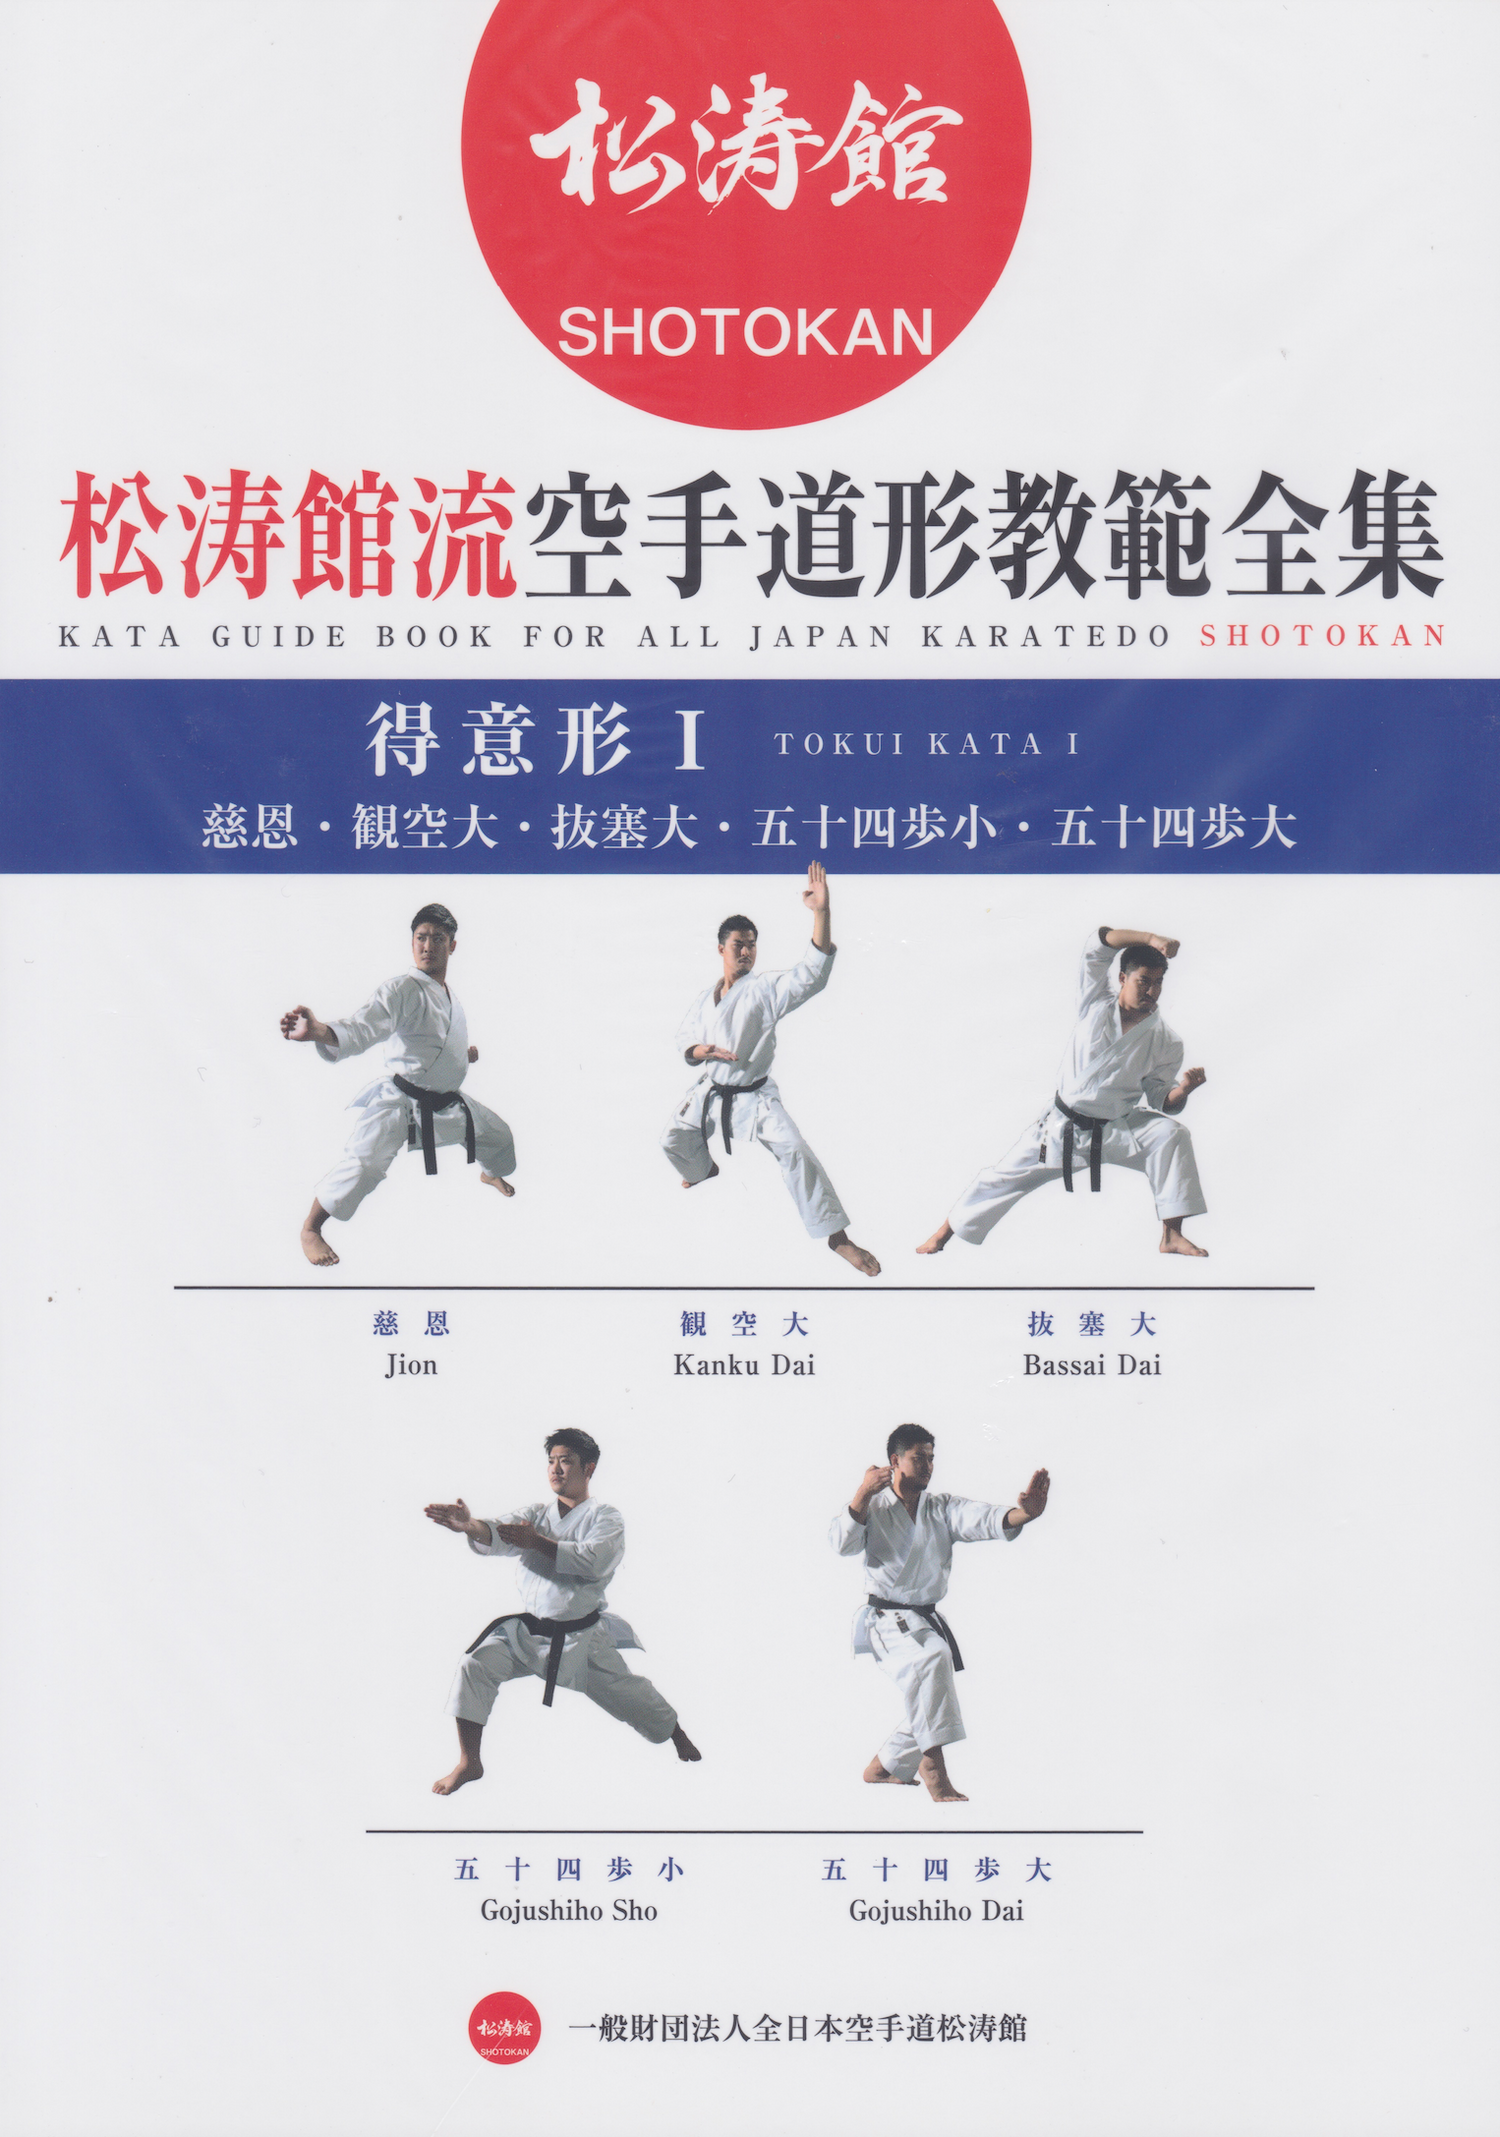 Kata Guide Book for All Japan Karatedo Shotokan Tokui Kata 1